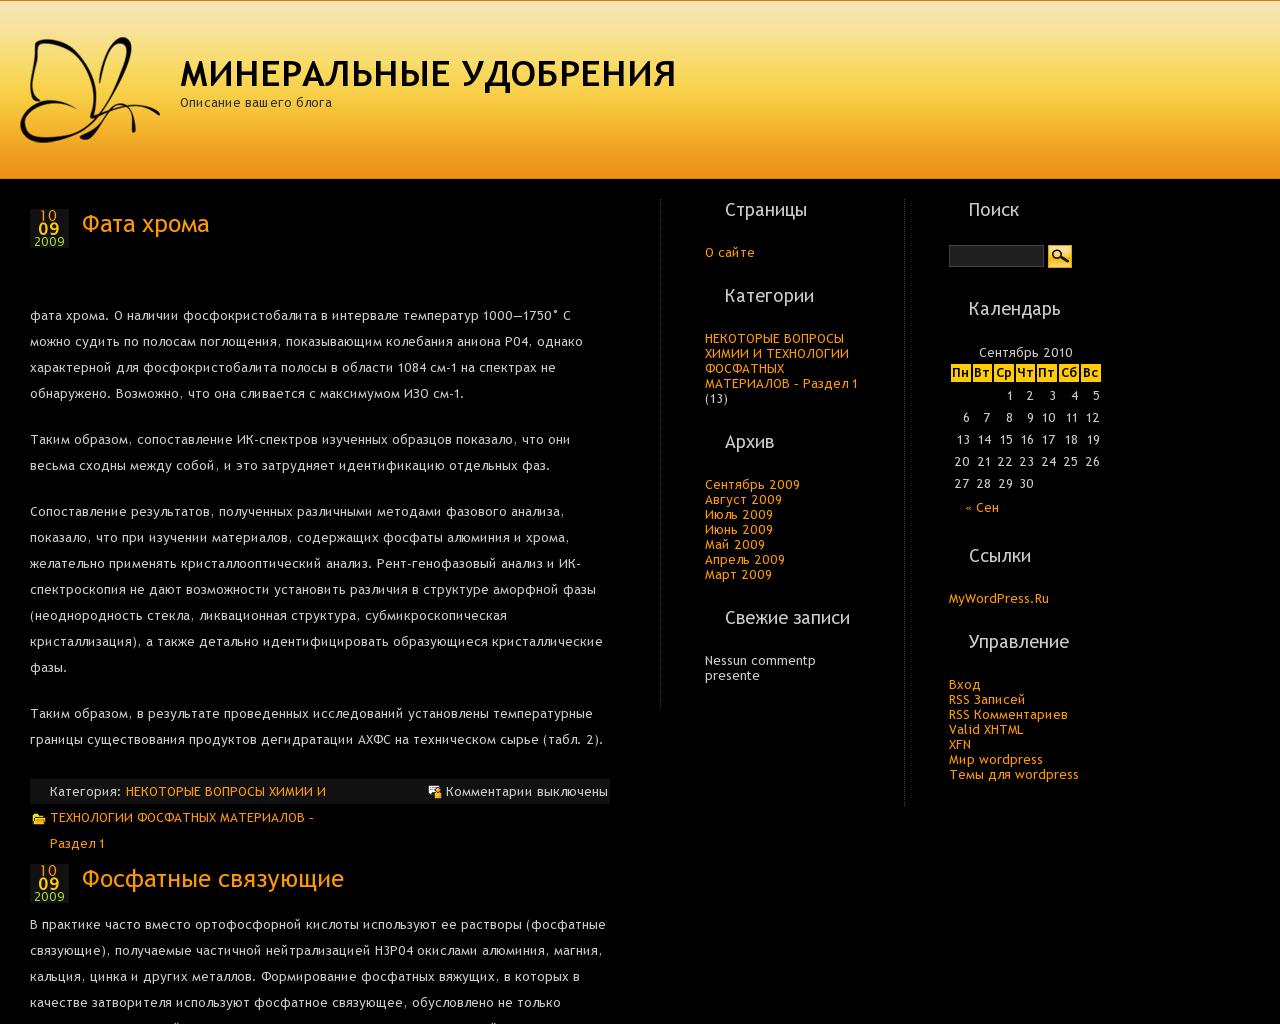 Изображение сайта mmmi.ru в разрешении 1280x1024